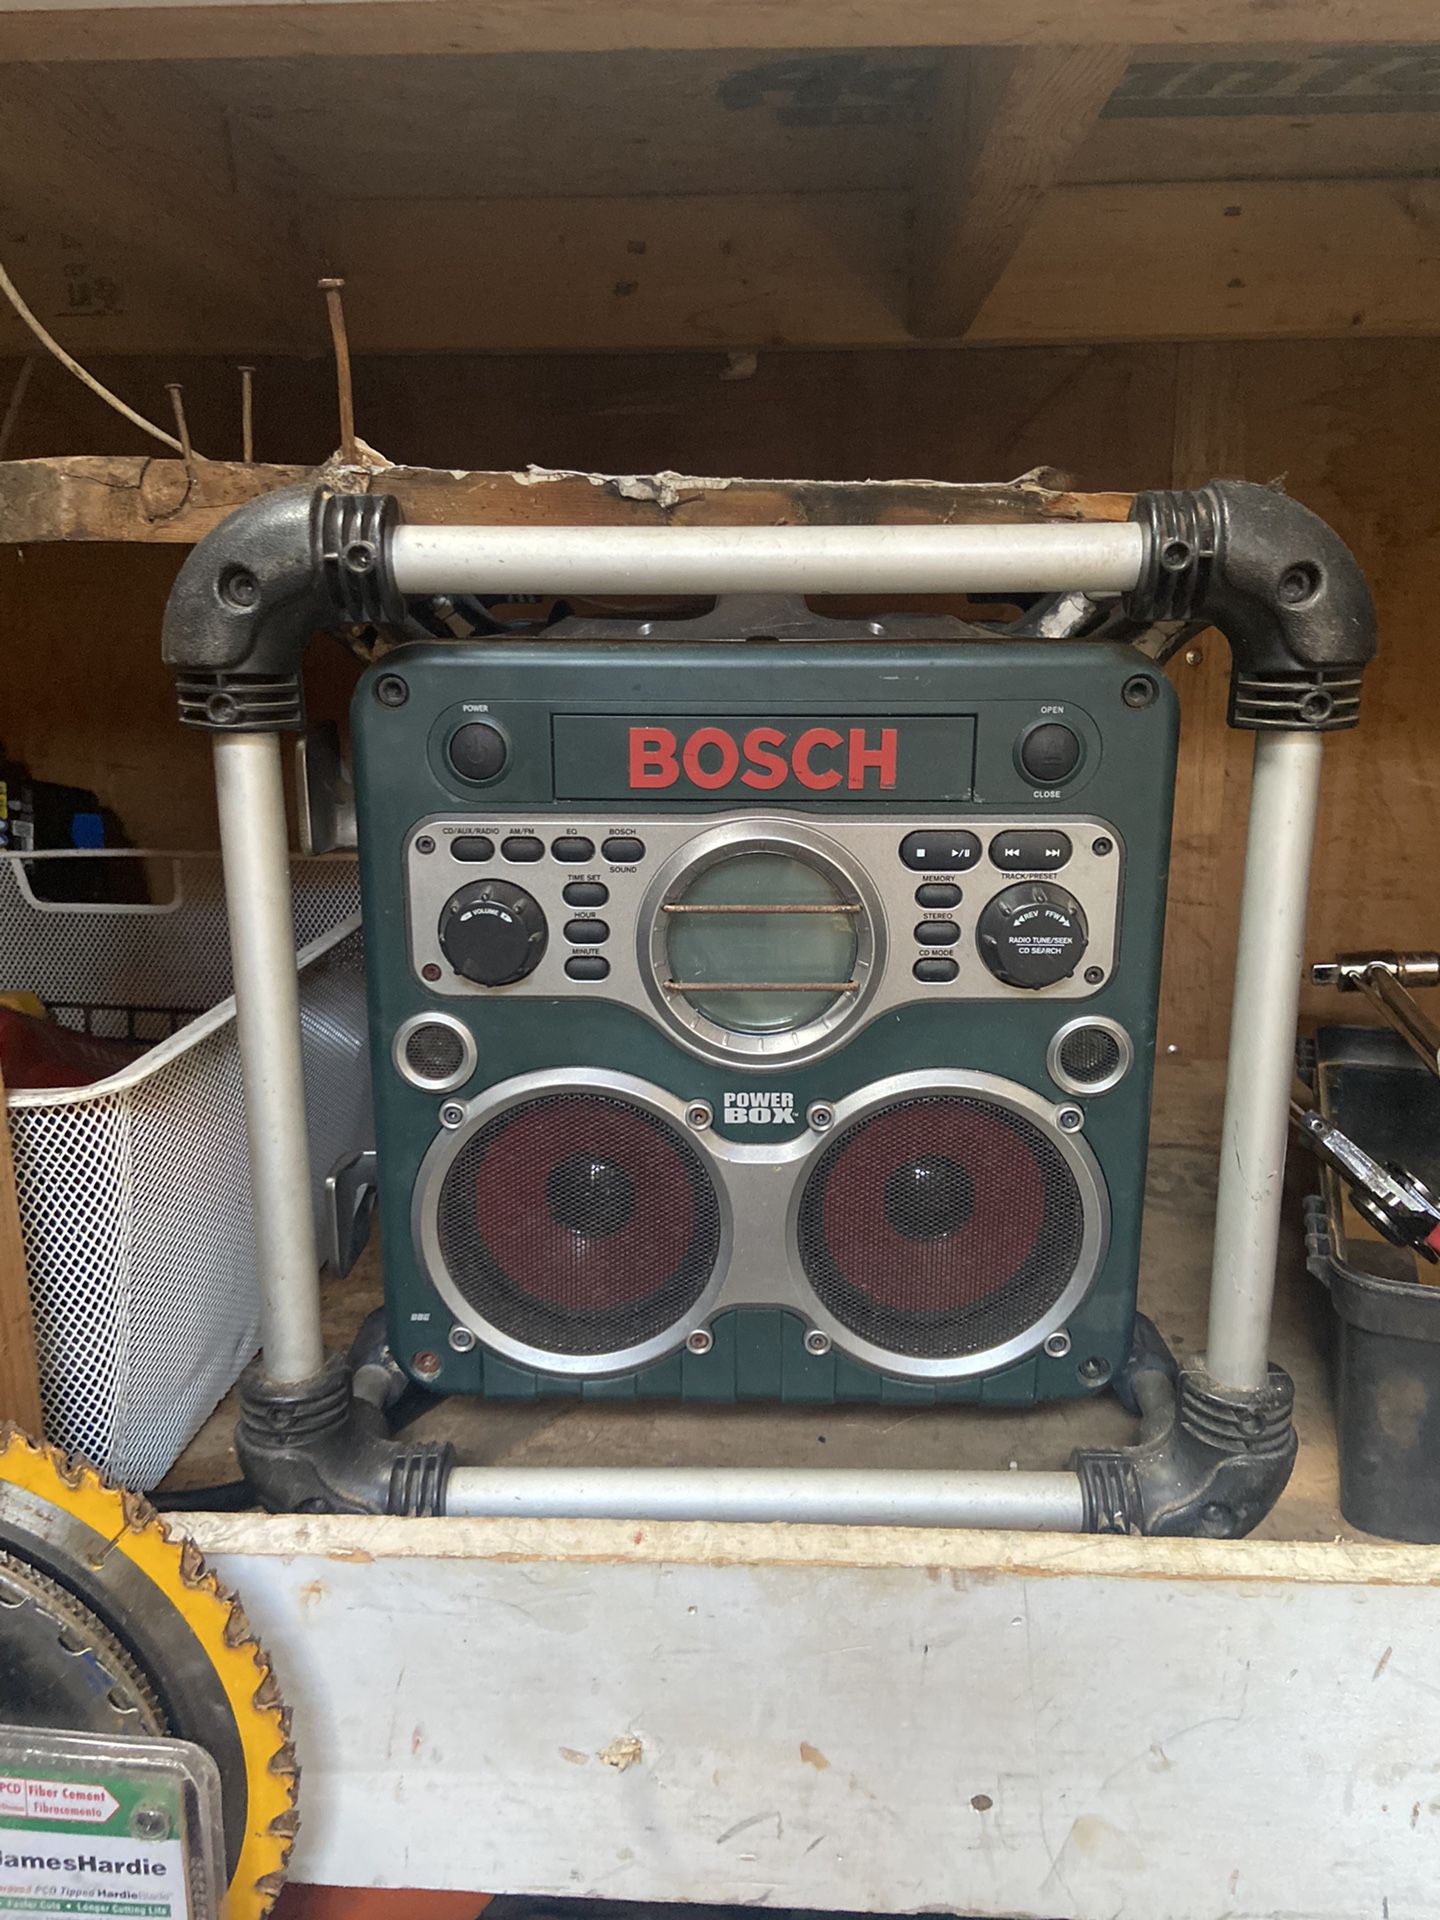 Bosch Power Box